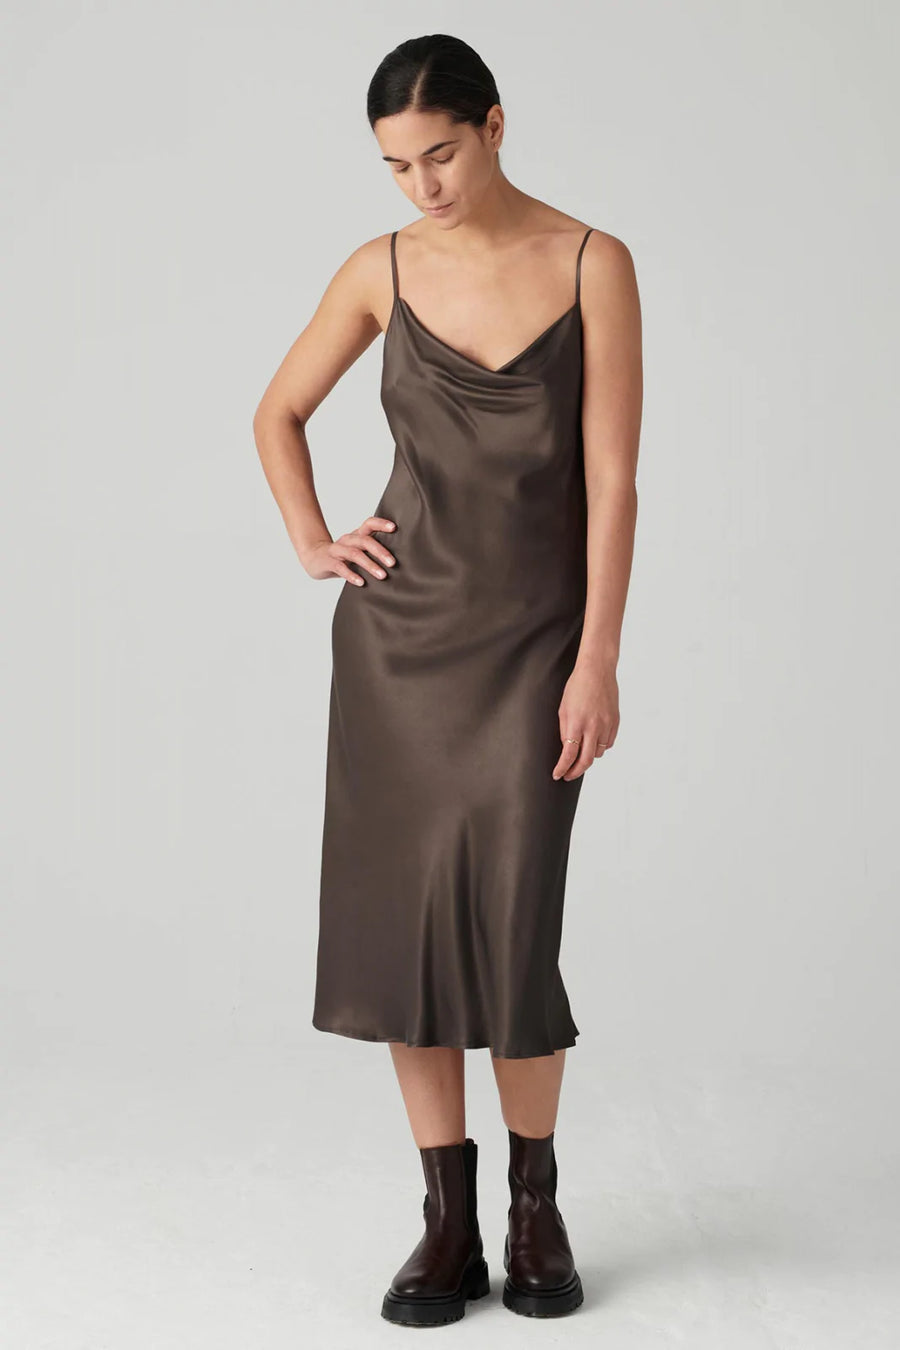 Les Goodies - Elementy Wear Gallasia Satin Dress